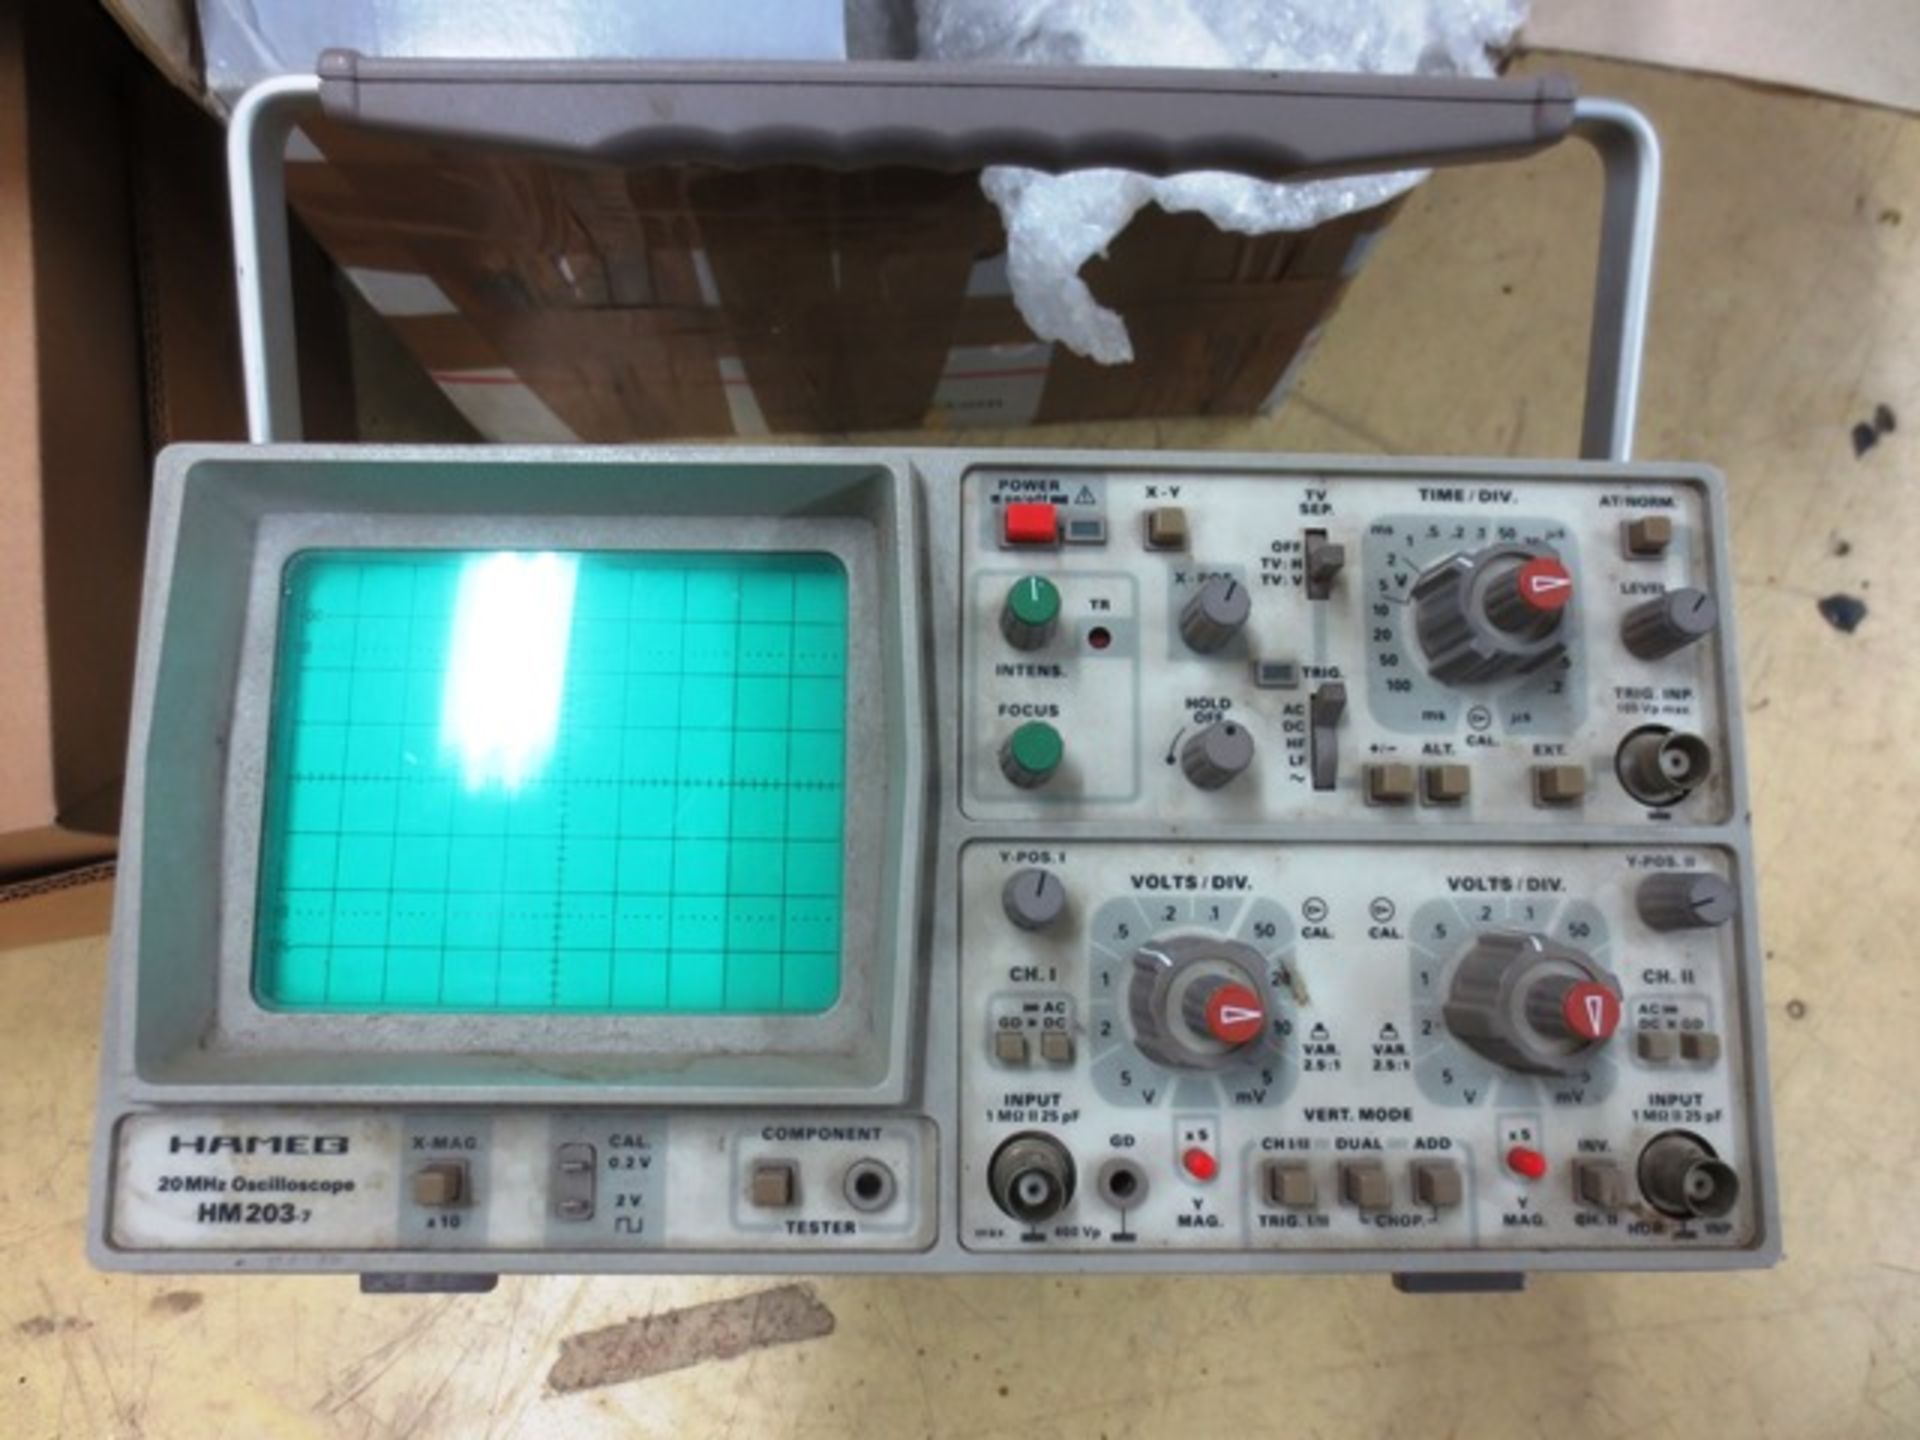 Hameg HM203-7 240MHz oscilloscope